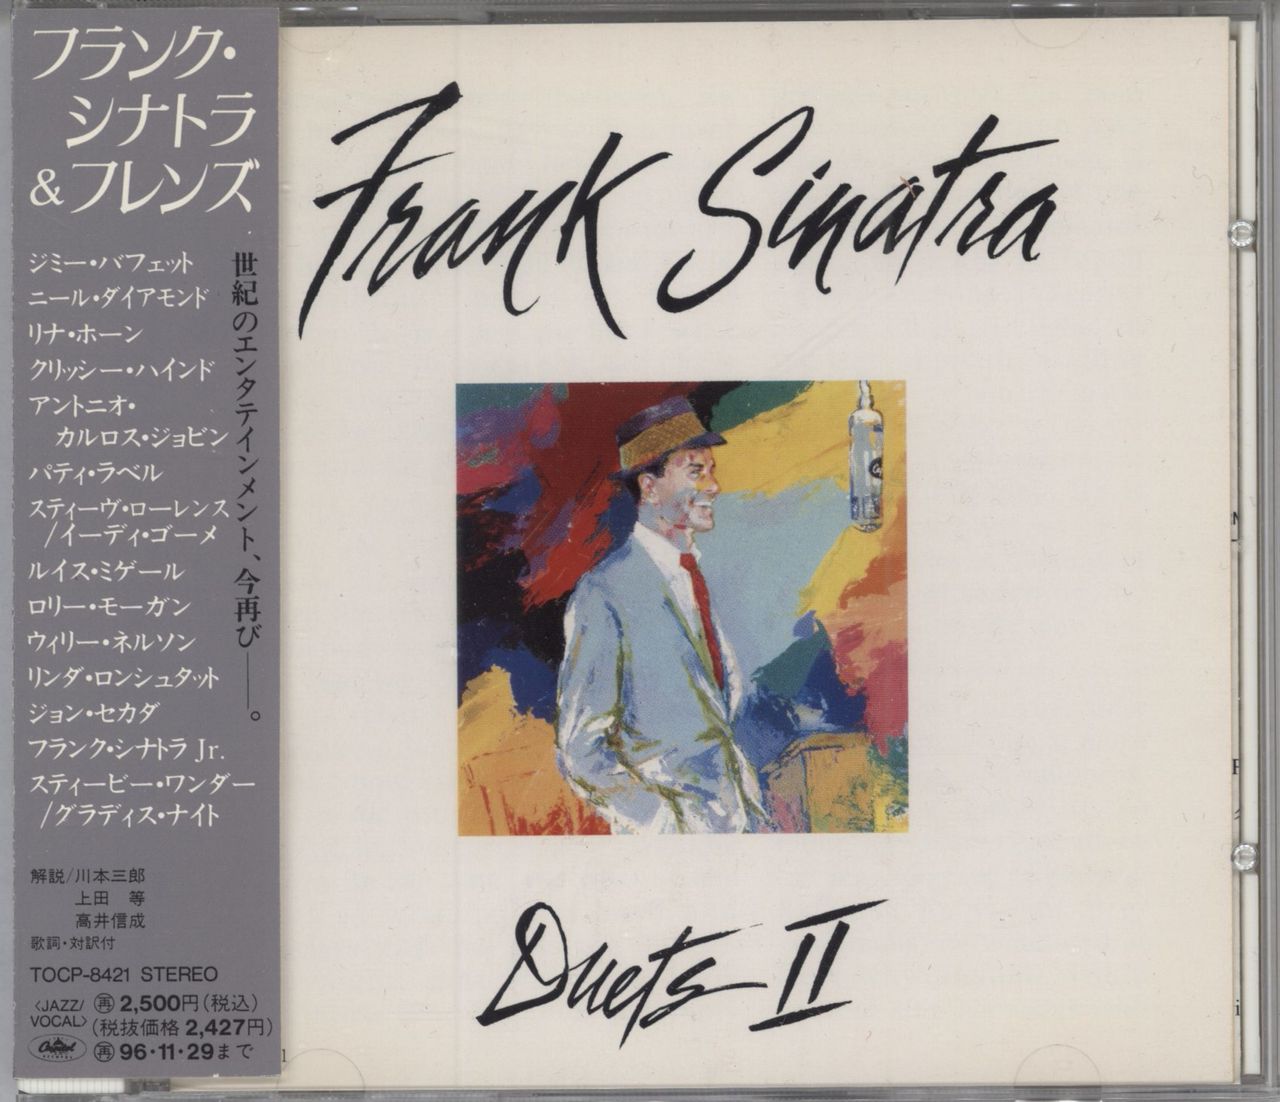 Frank Sinatra Duets II Japanese Promo CD album